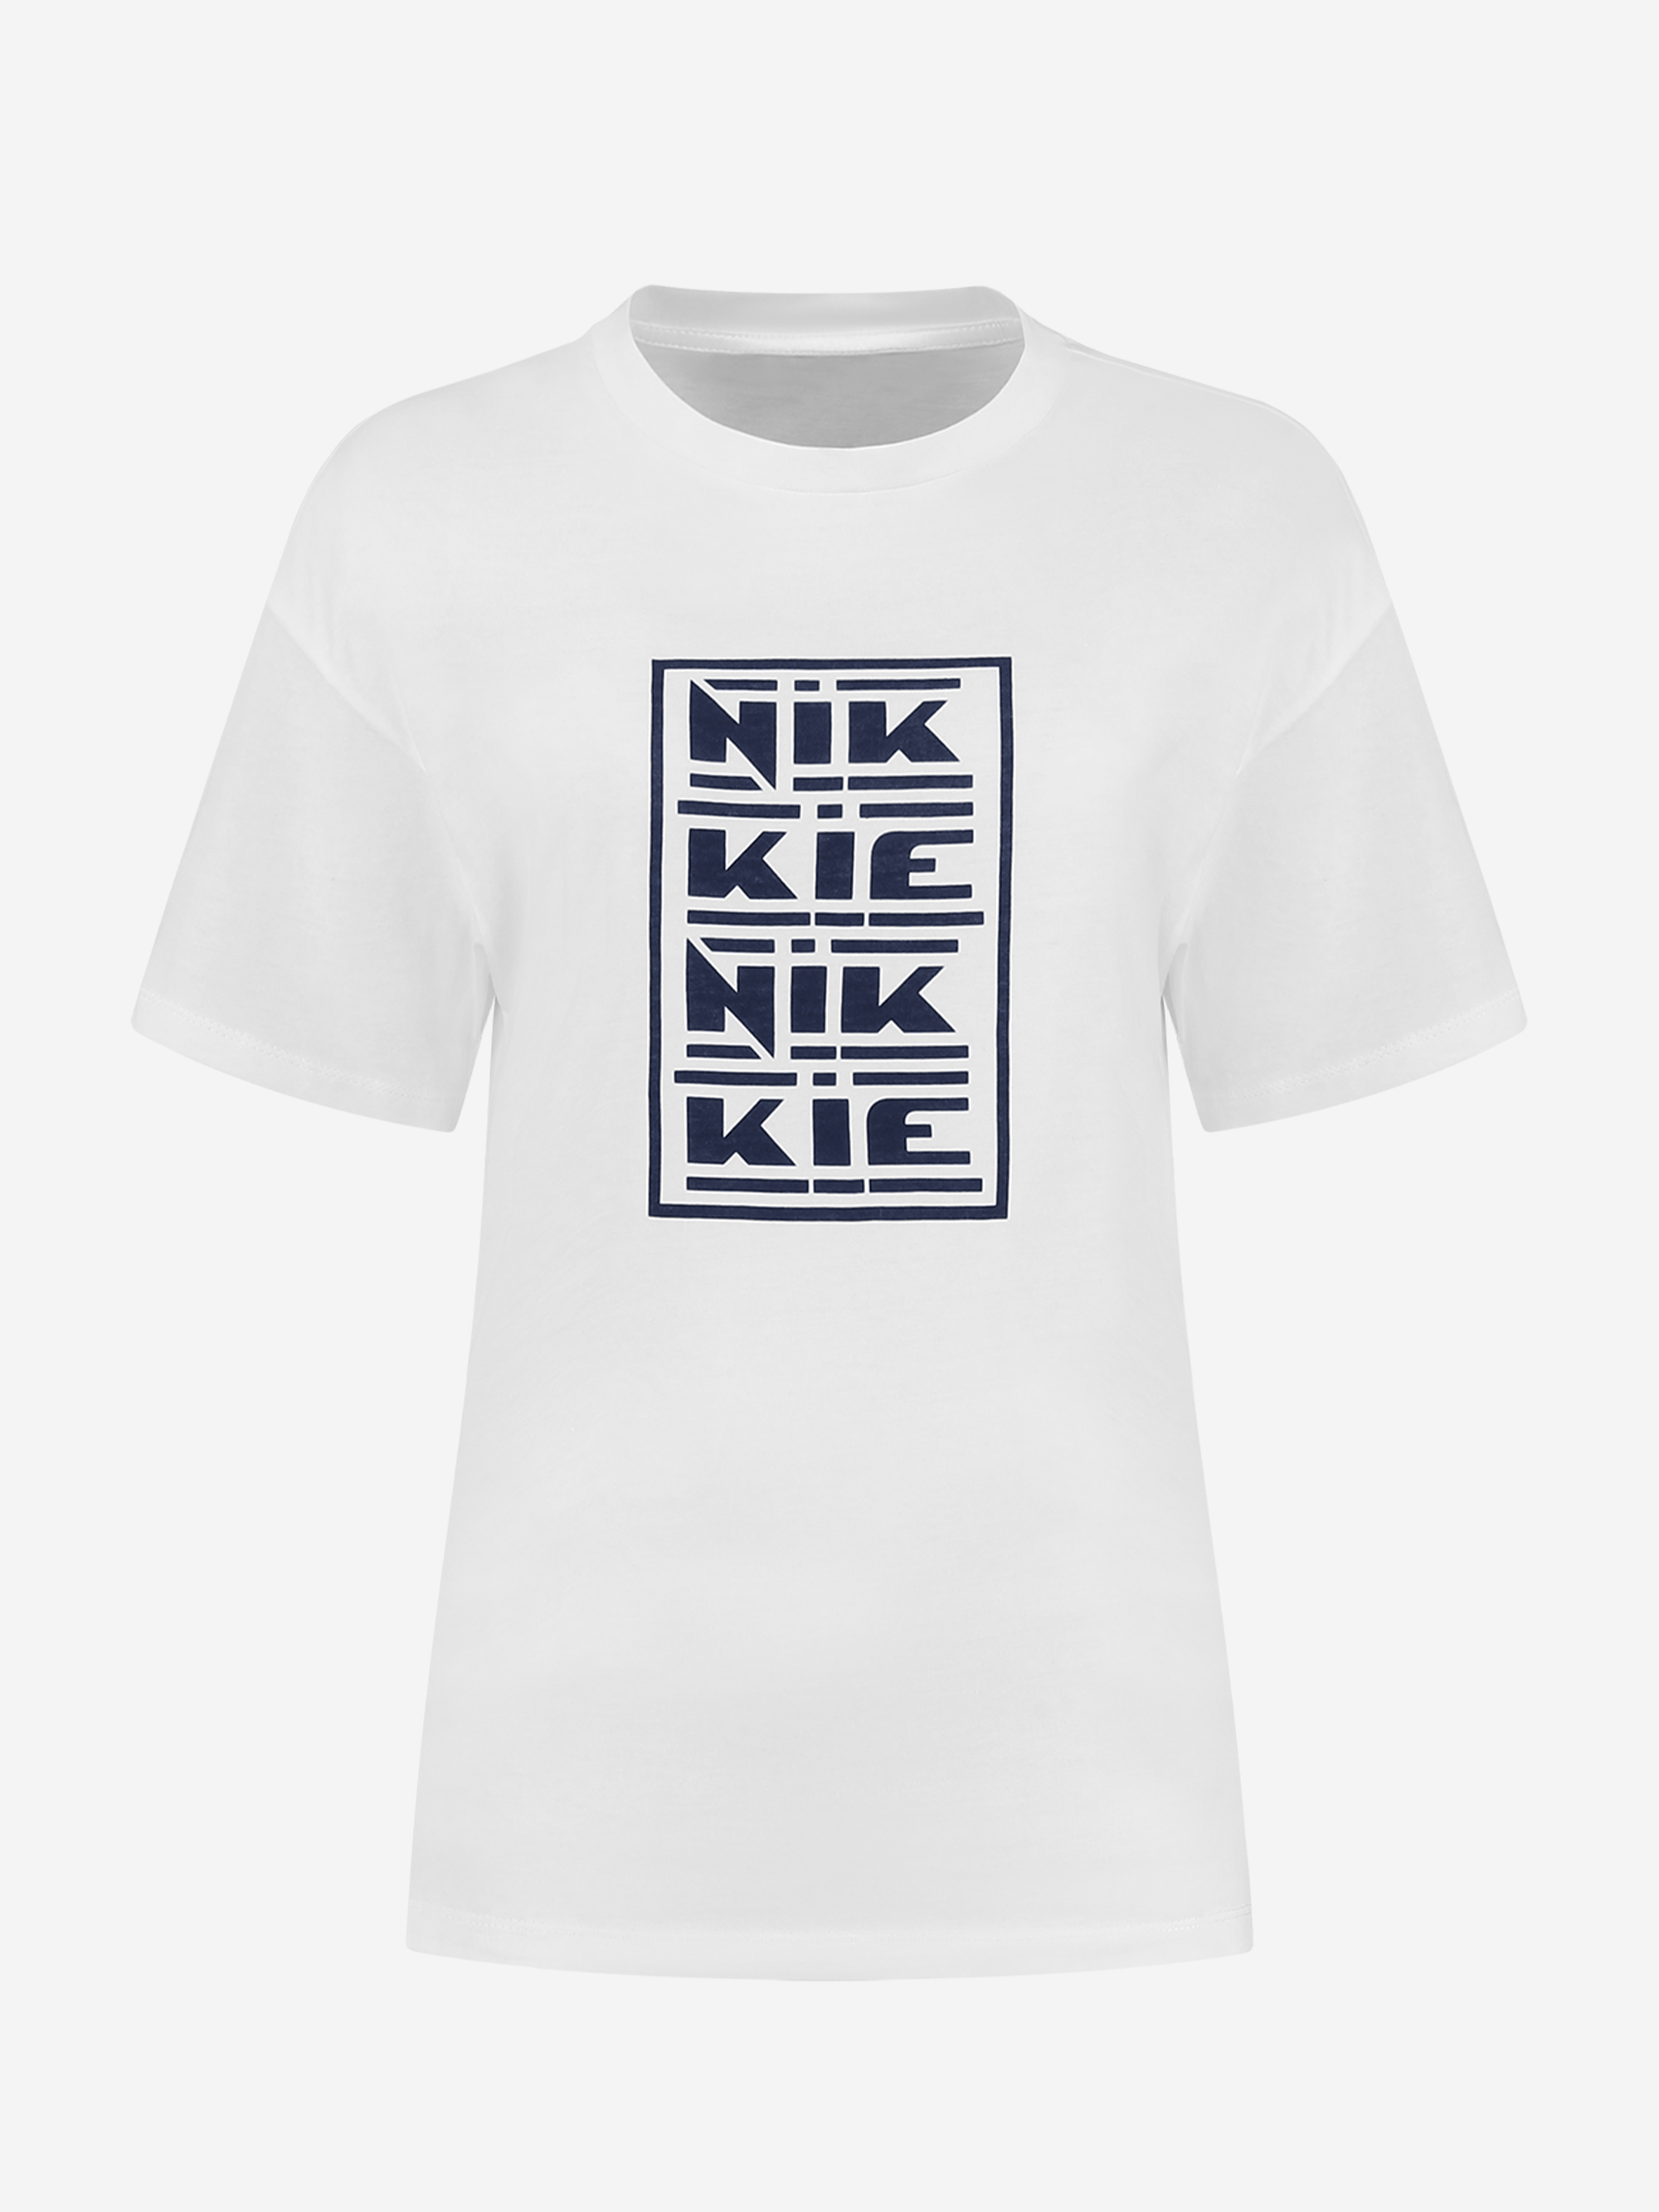 NIKKIE Square T-Shirt